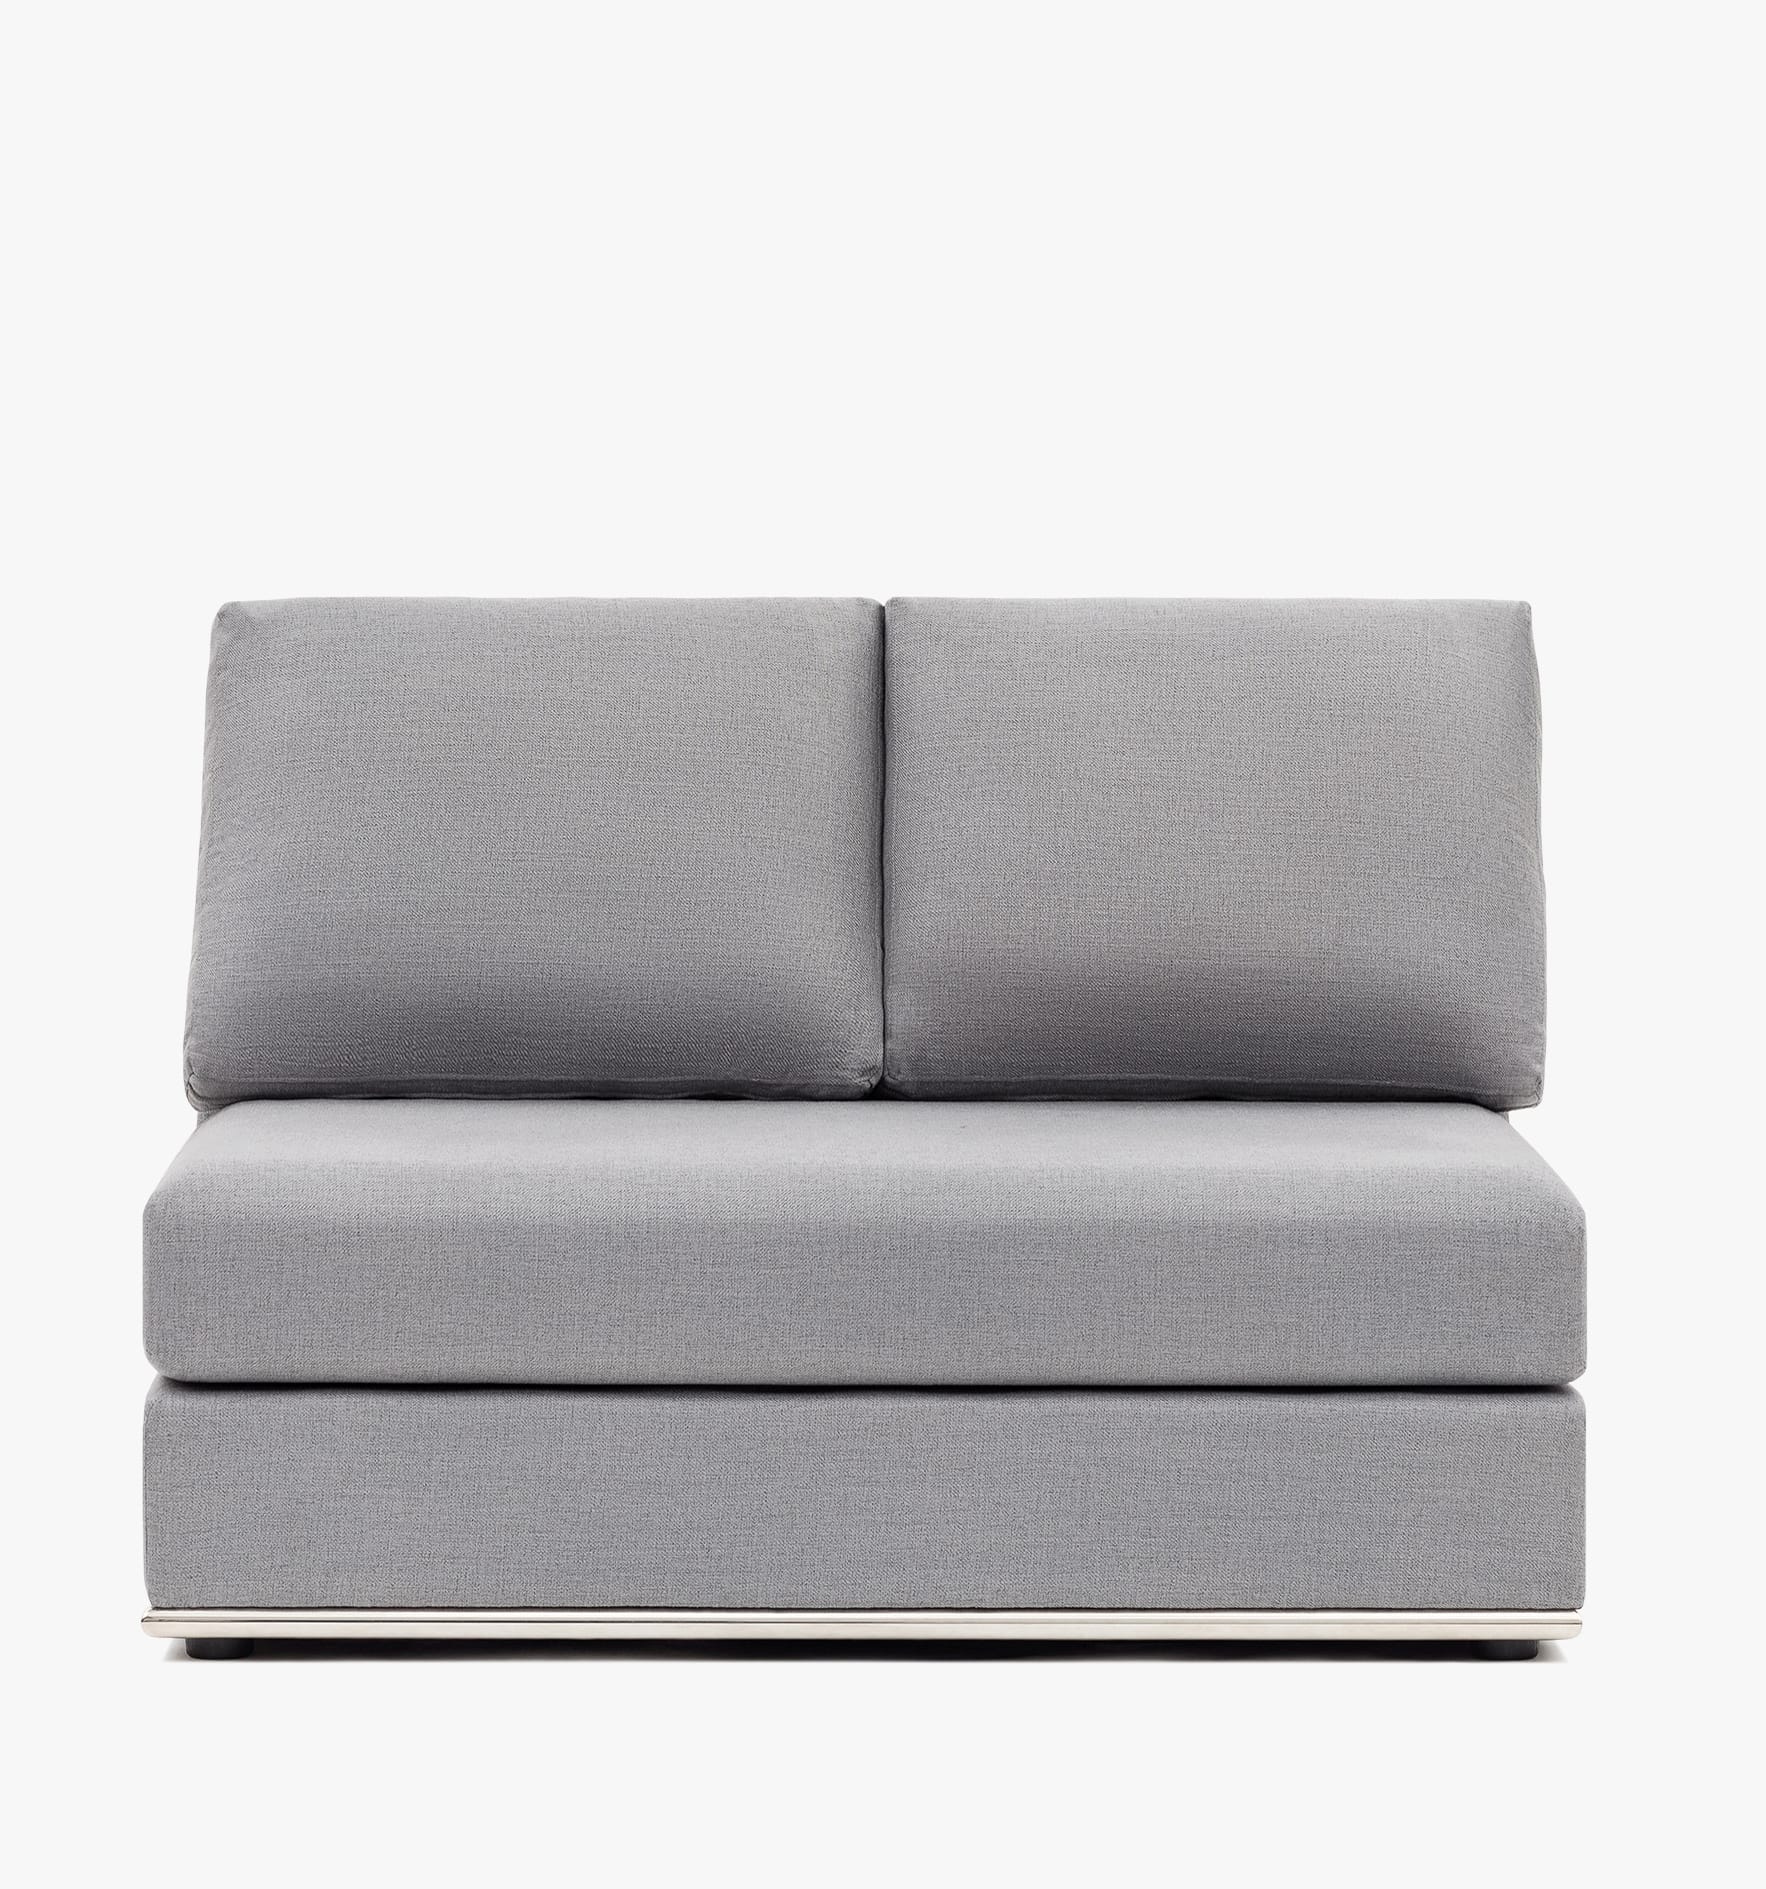 Flow Armless Chair - grey